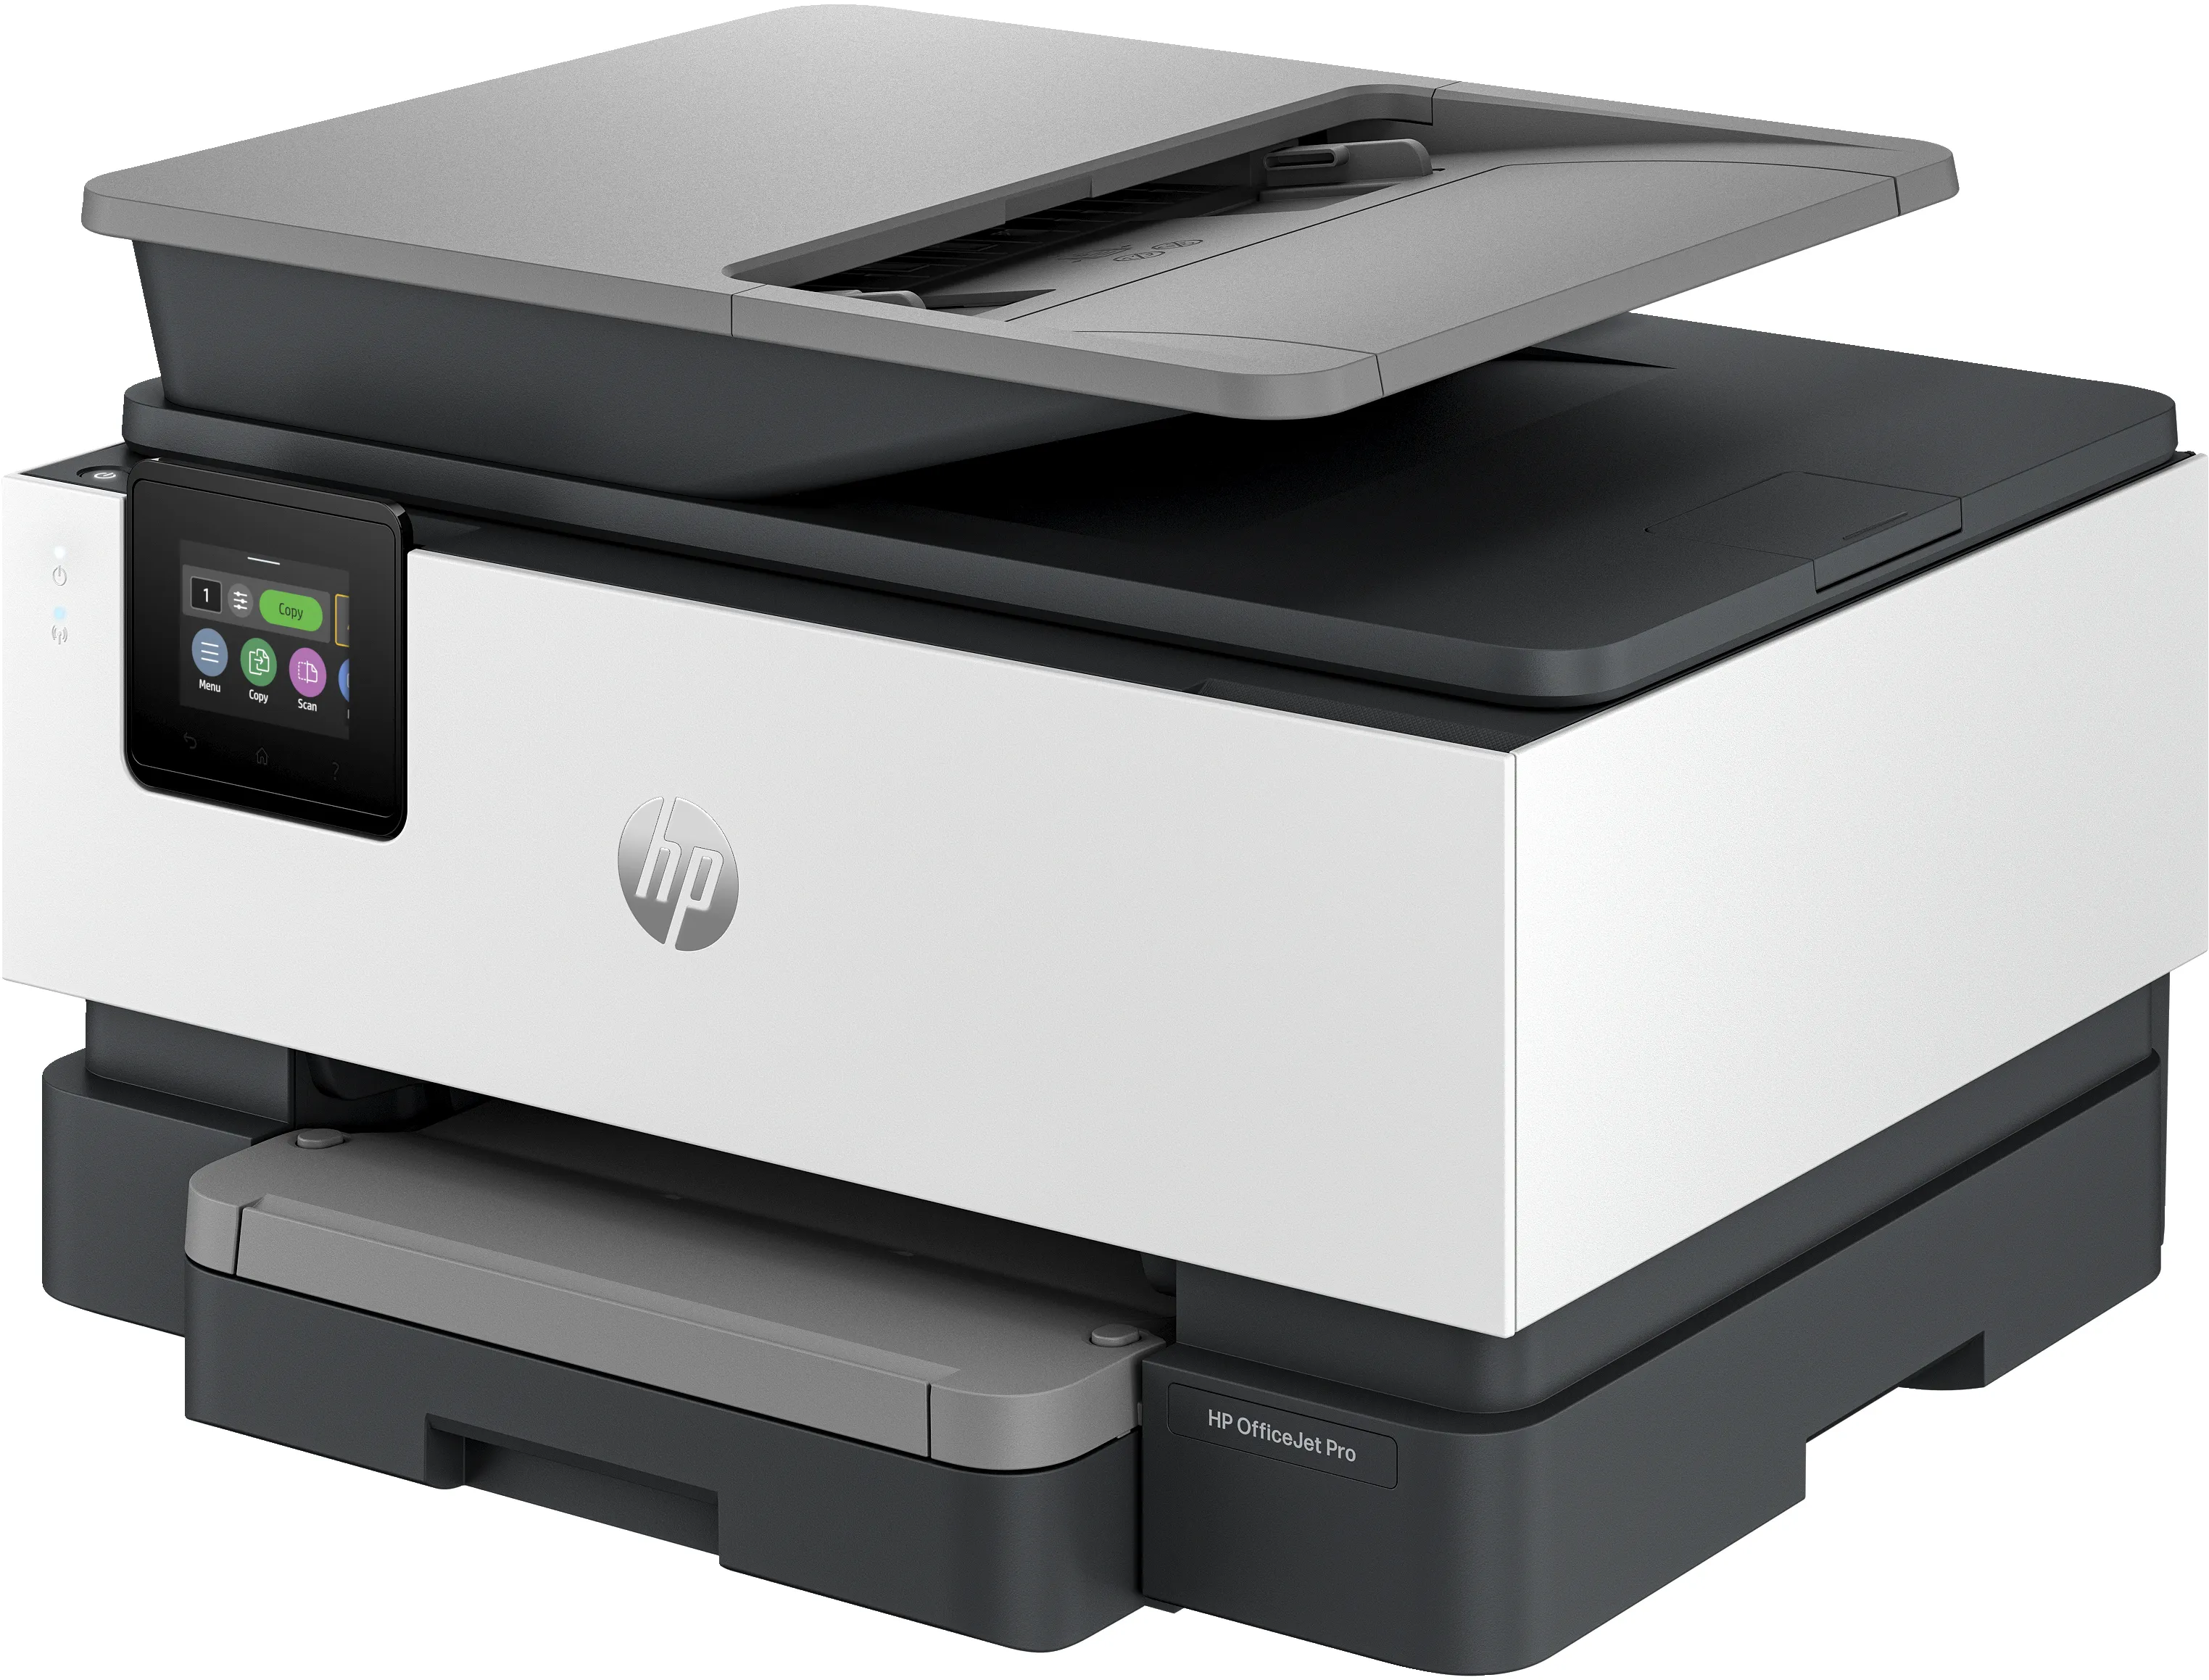 Vente HP OfficeJet Pro 9122e All-in-One 22ppm Printer HP au meilleur prix - visuel 2